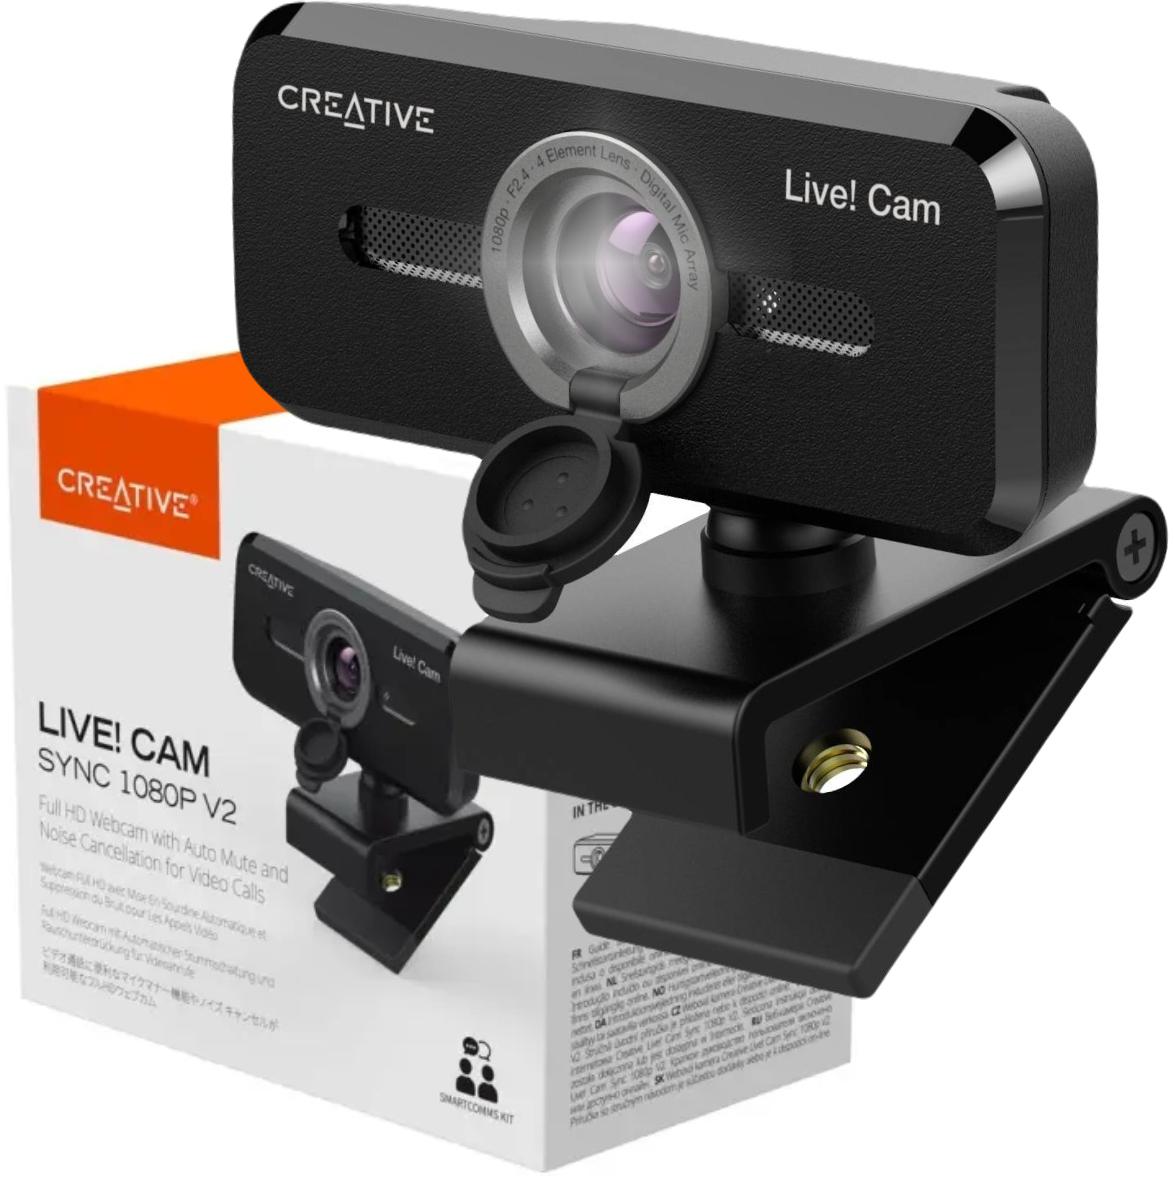 Kamera internetowa Creative Live! Cam Sync 1080 V2 FullHD - najważniejsze cechy: